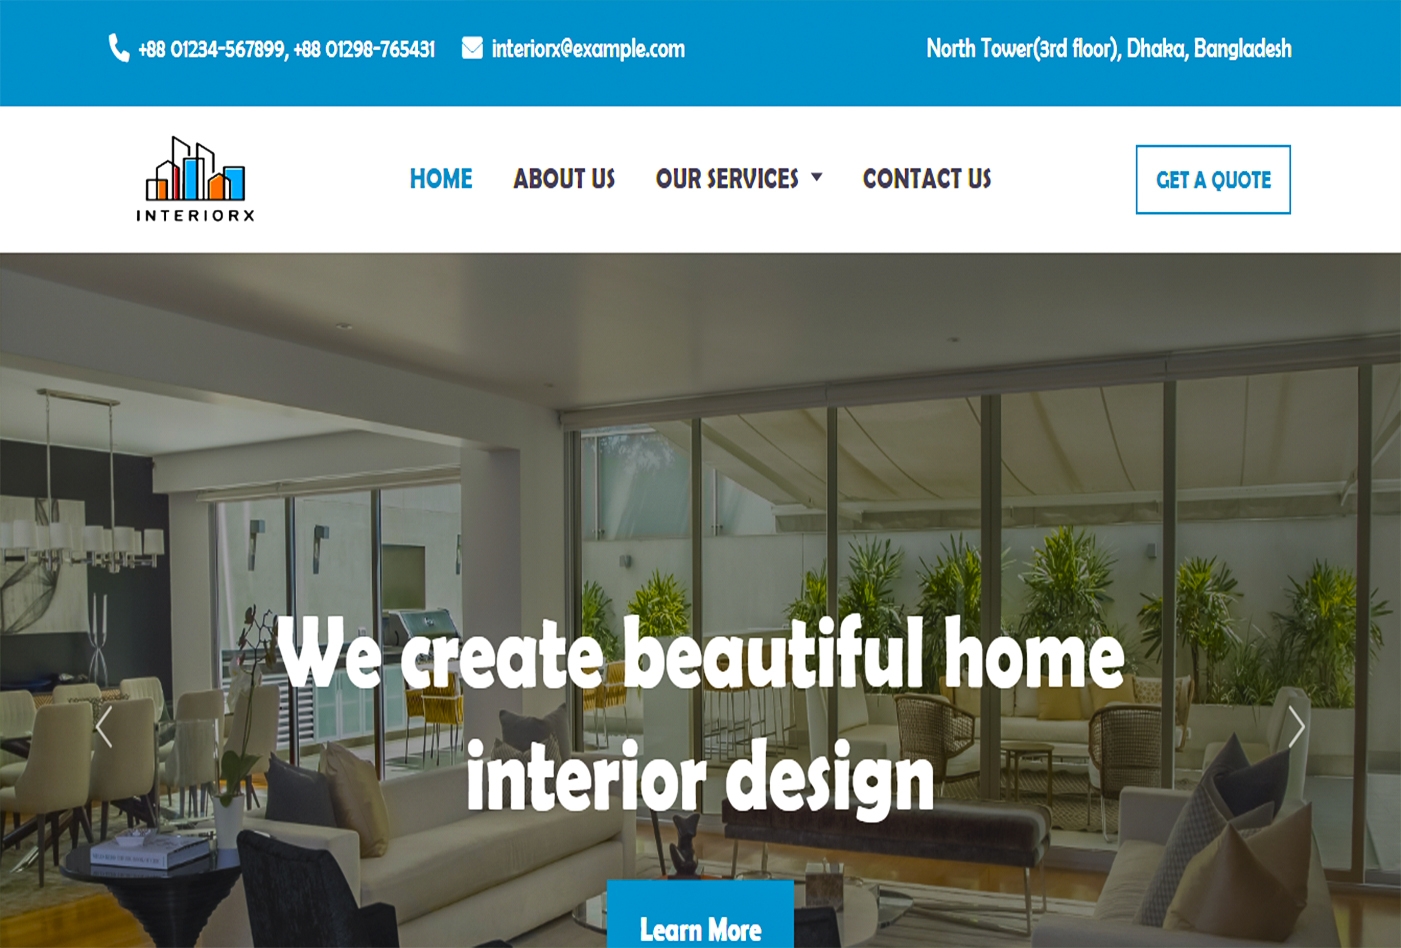 Architecture & Interior design Website using HTML CSS JavaScript & Bootstrap